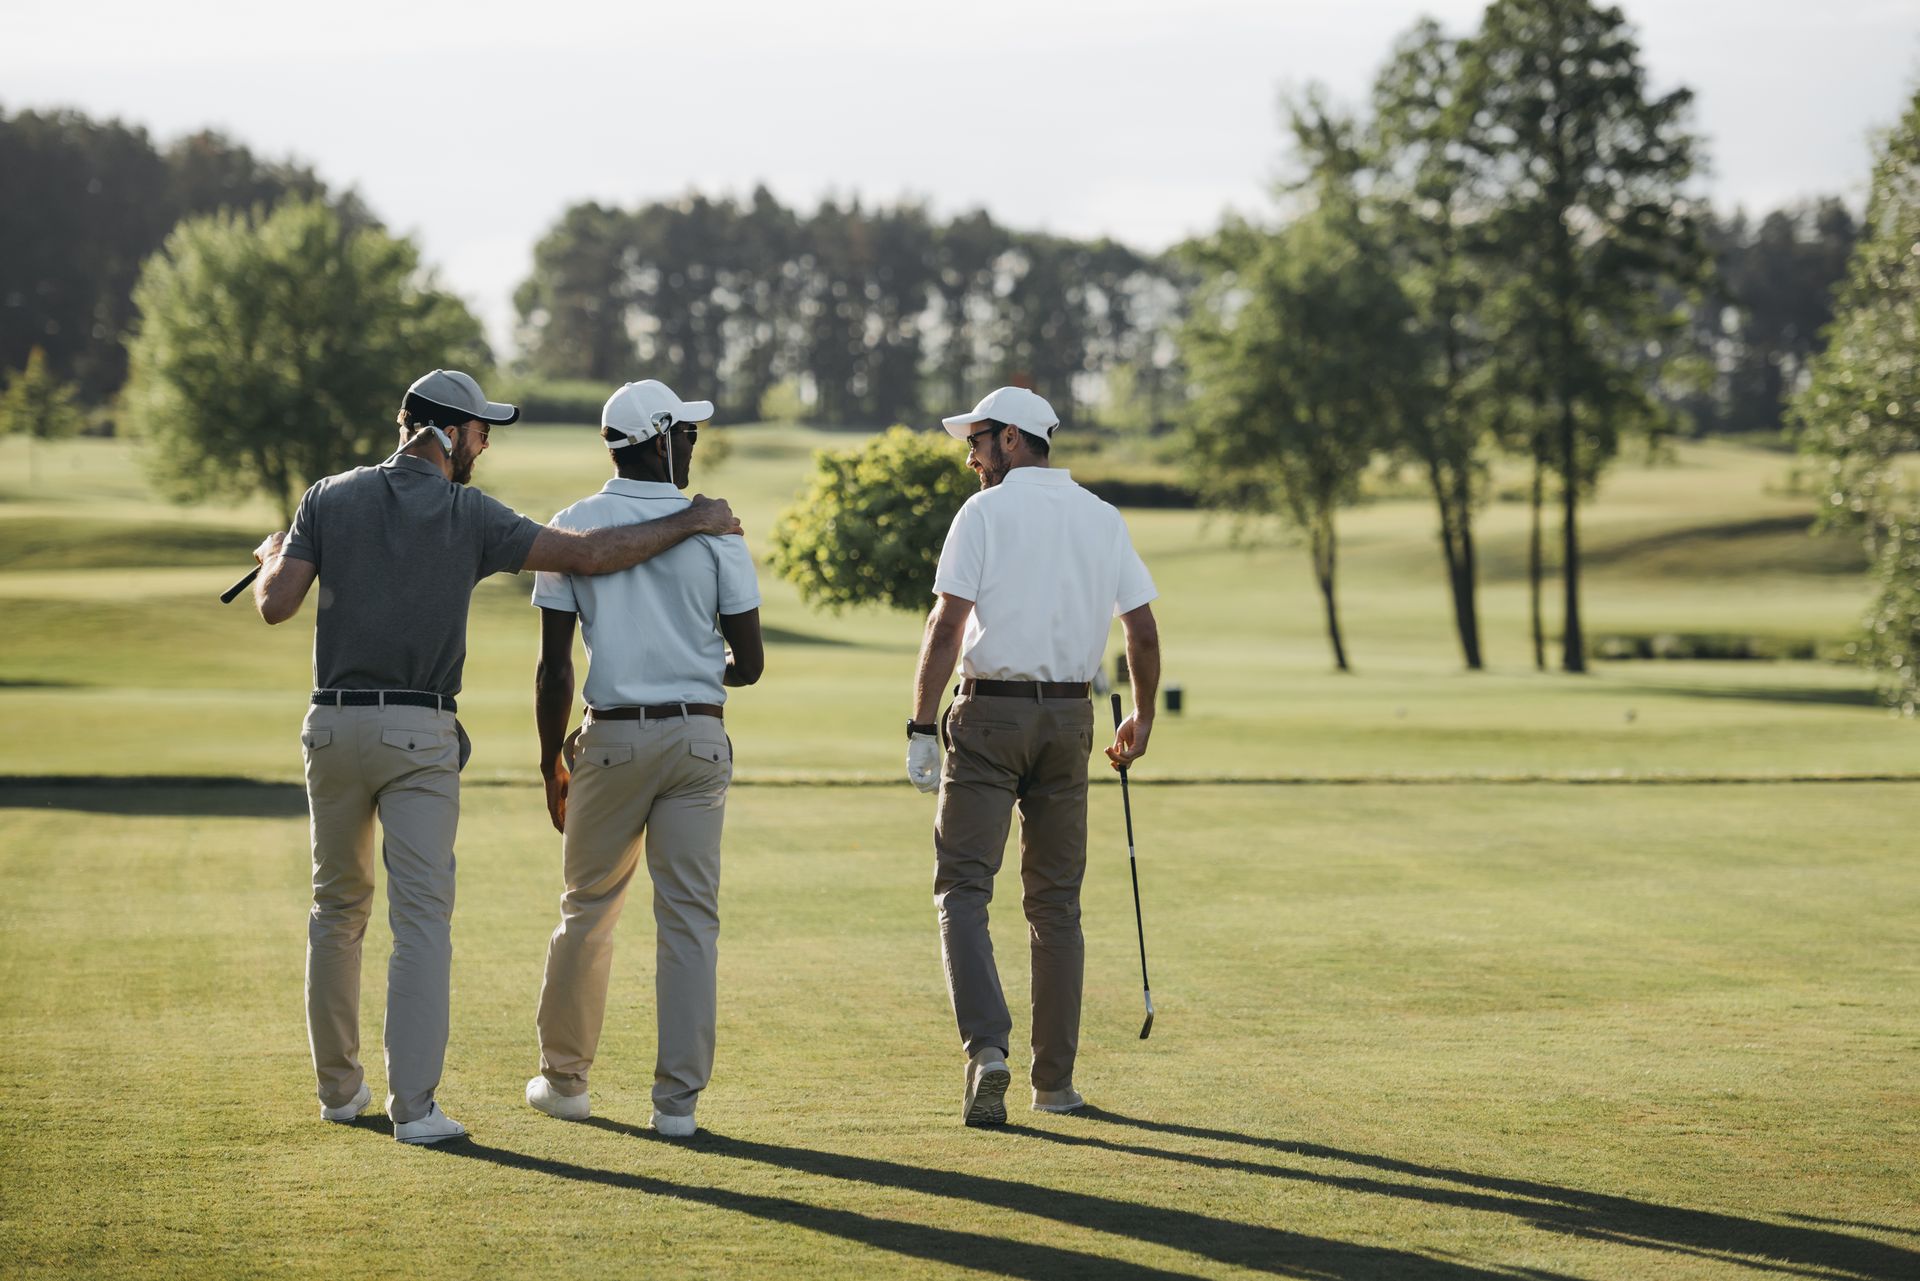 Group of men playing golf ©LightField Studios